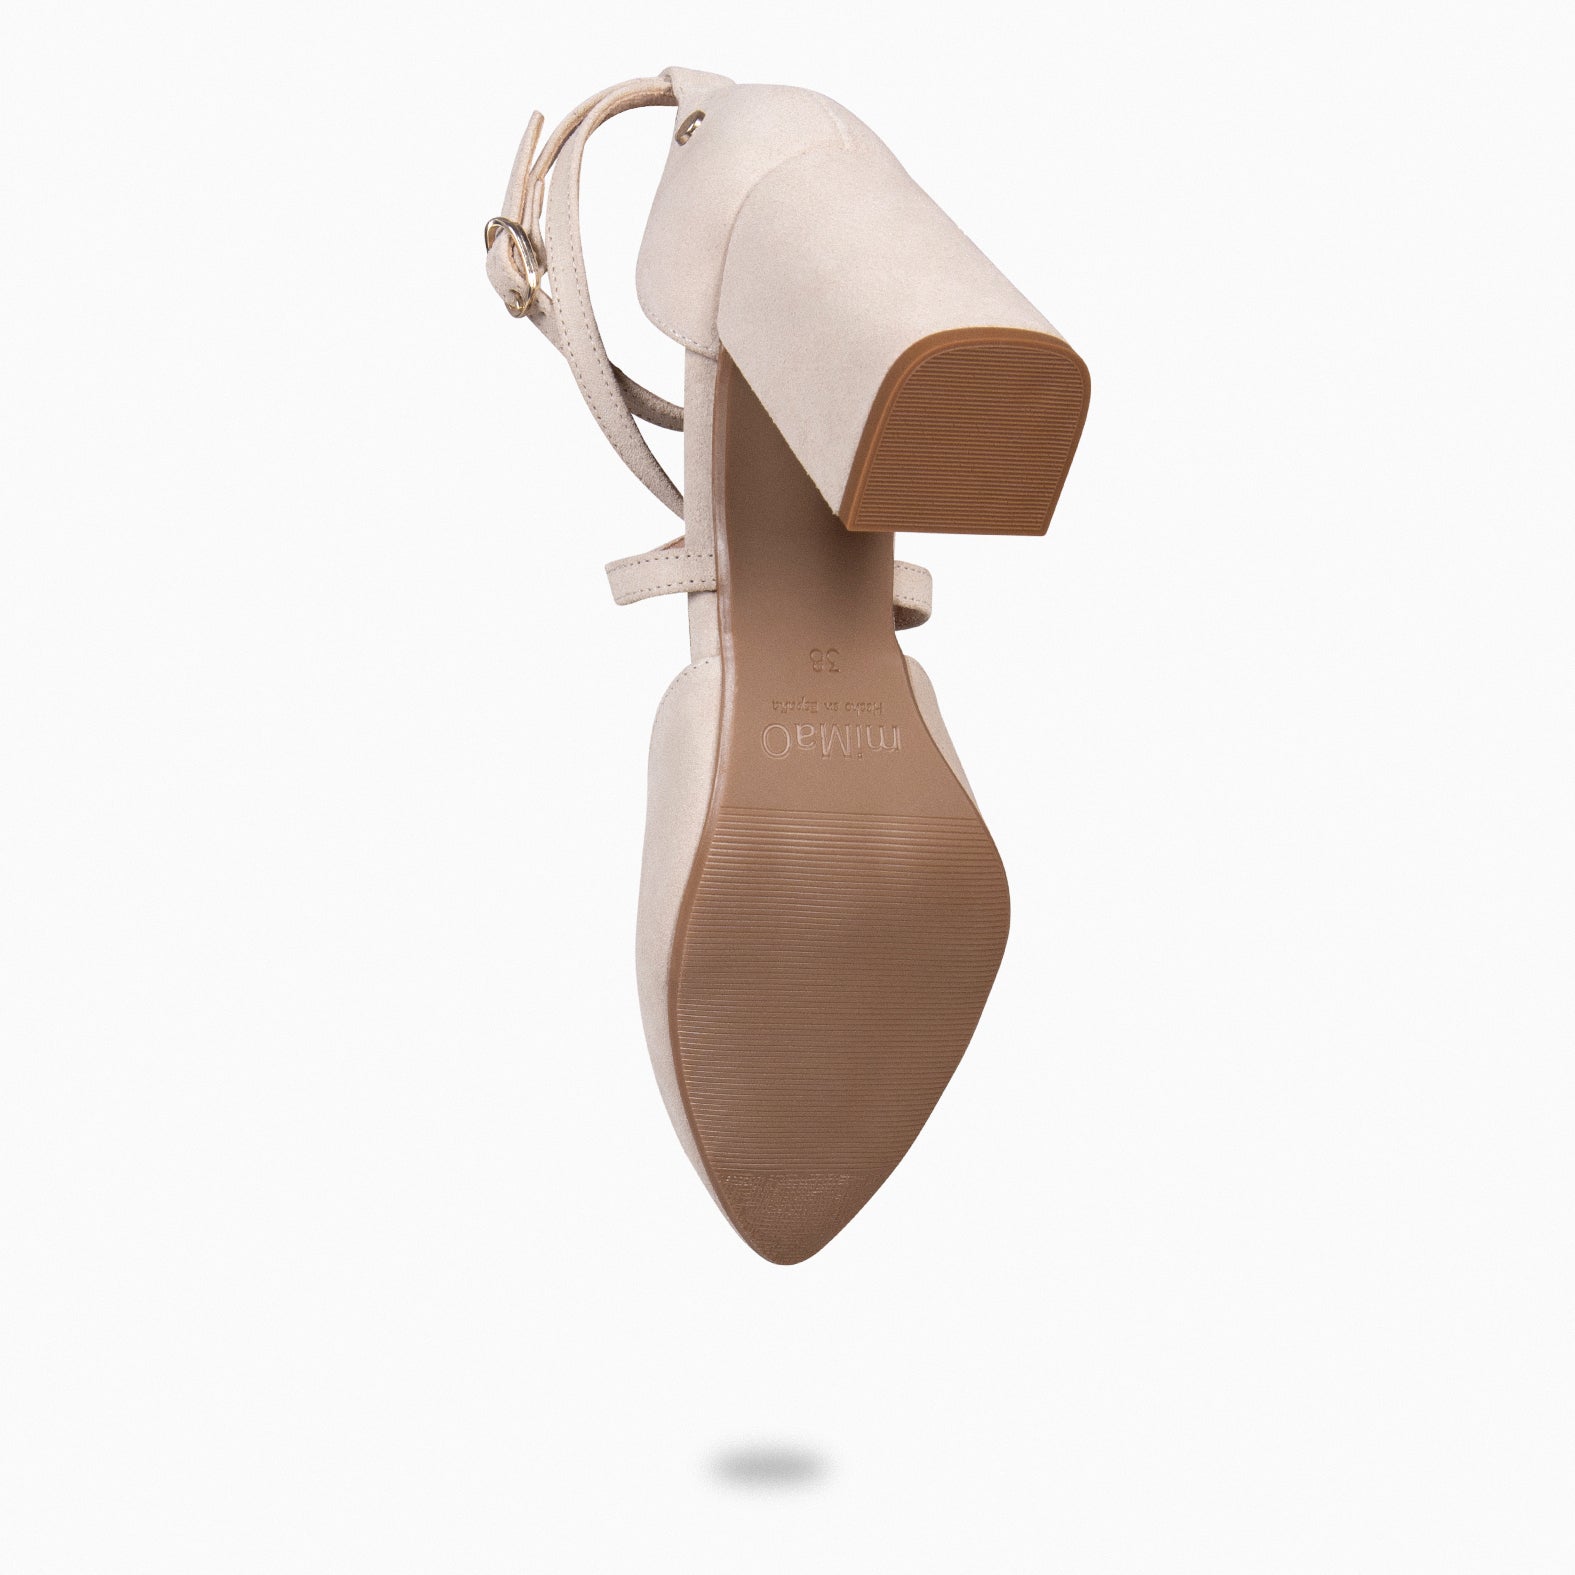 ARIEL – BEIGE Wide heel shoe